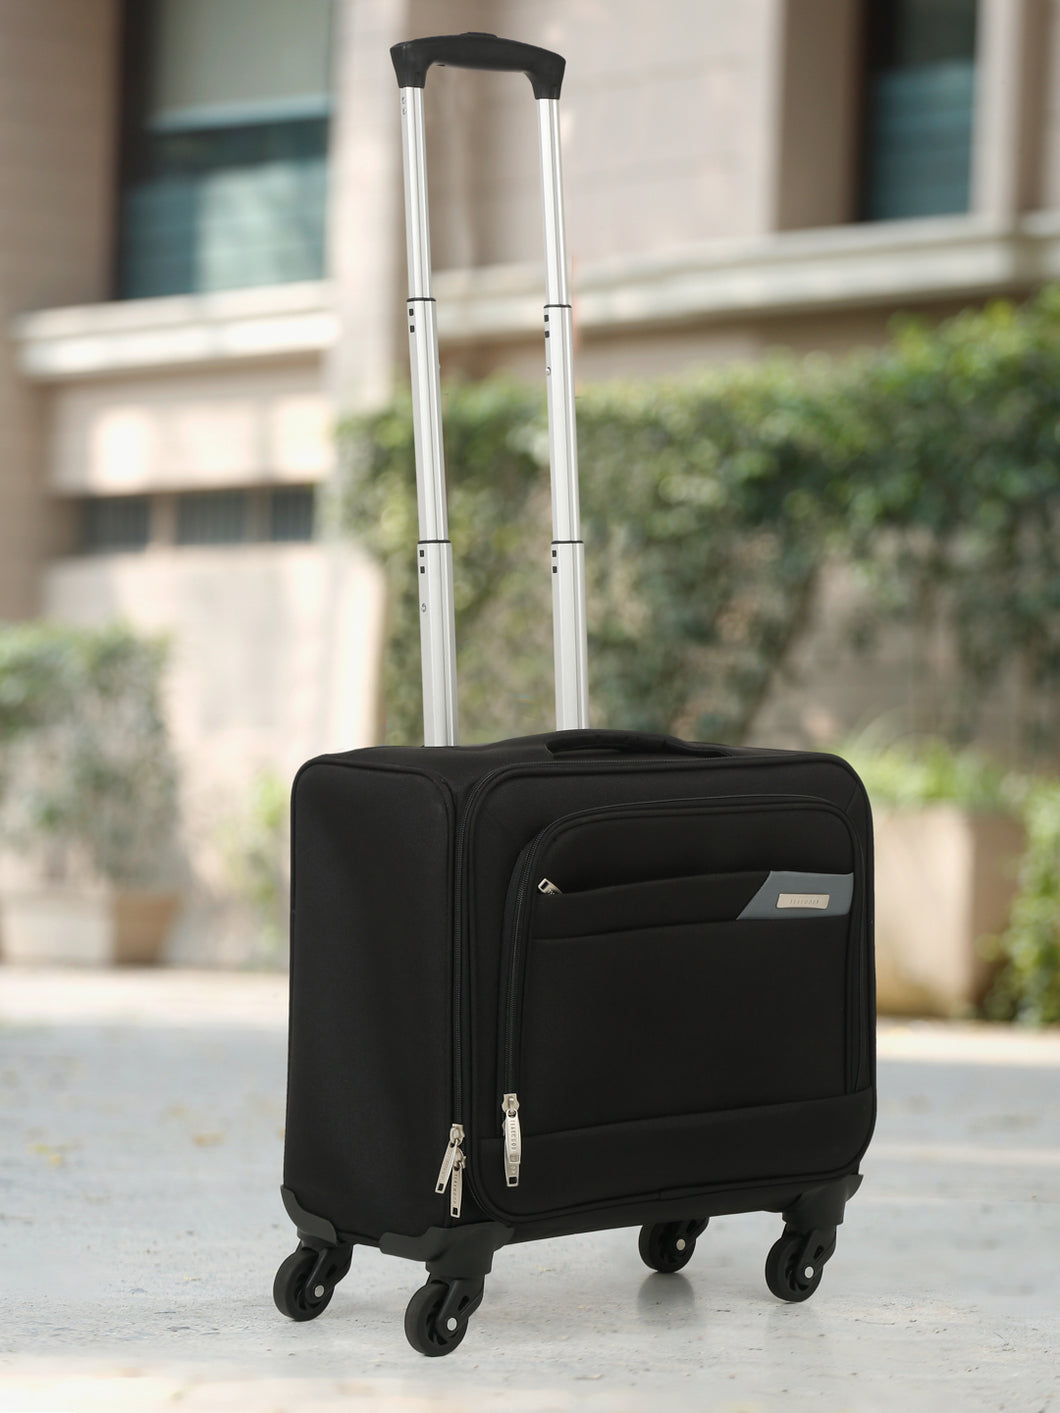 SAMSONITE Wheel Rolling Carry-On Black Briefcase Luggage Overnight Bag Case  17” | eBay